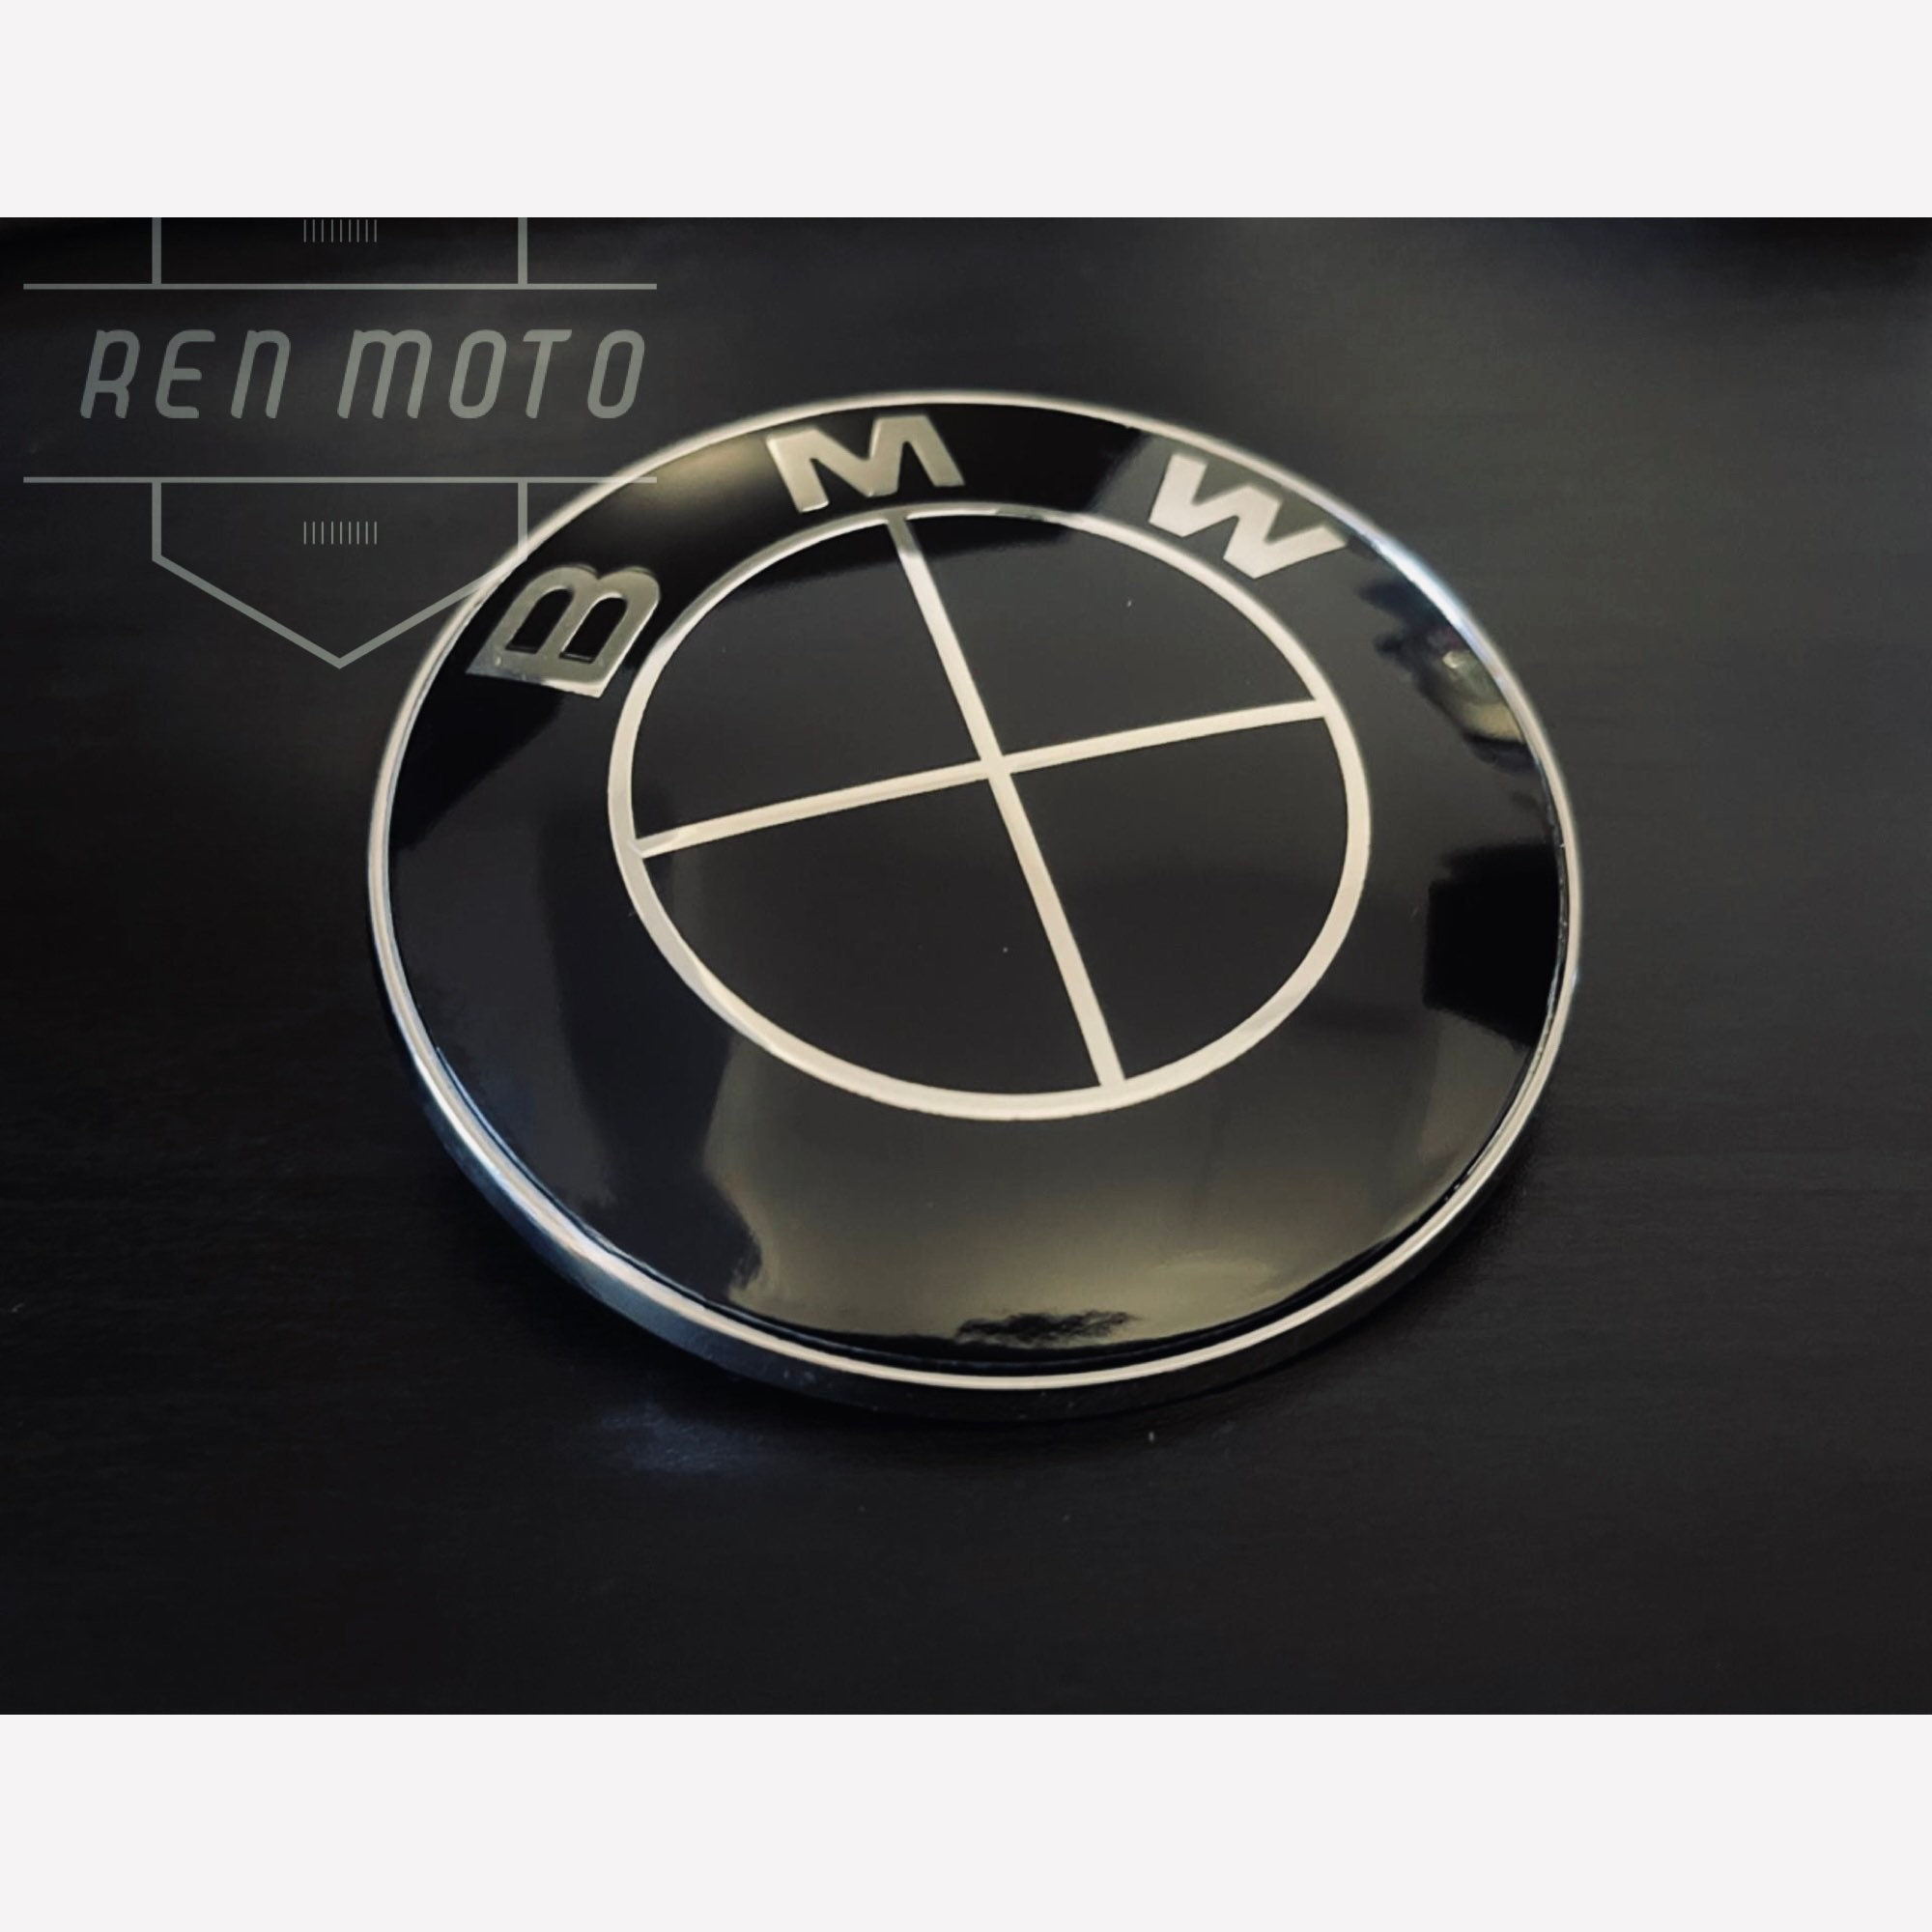 BMW emblem decal cover set black - HPoskam engineering